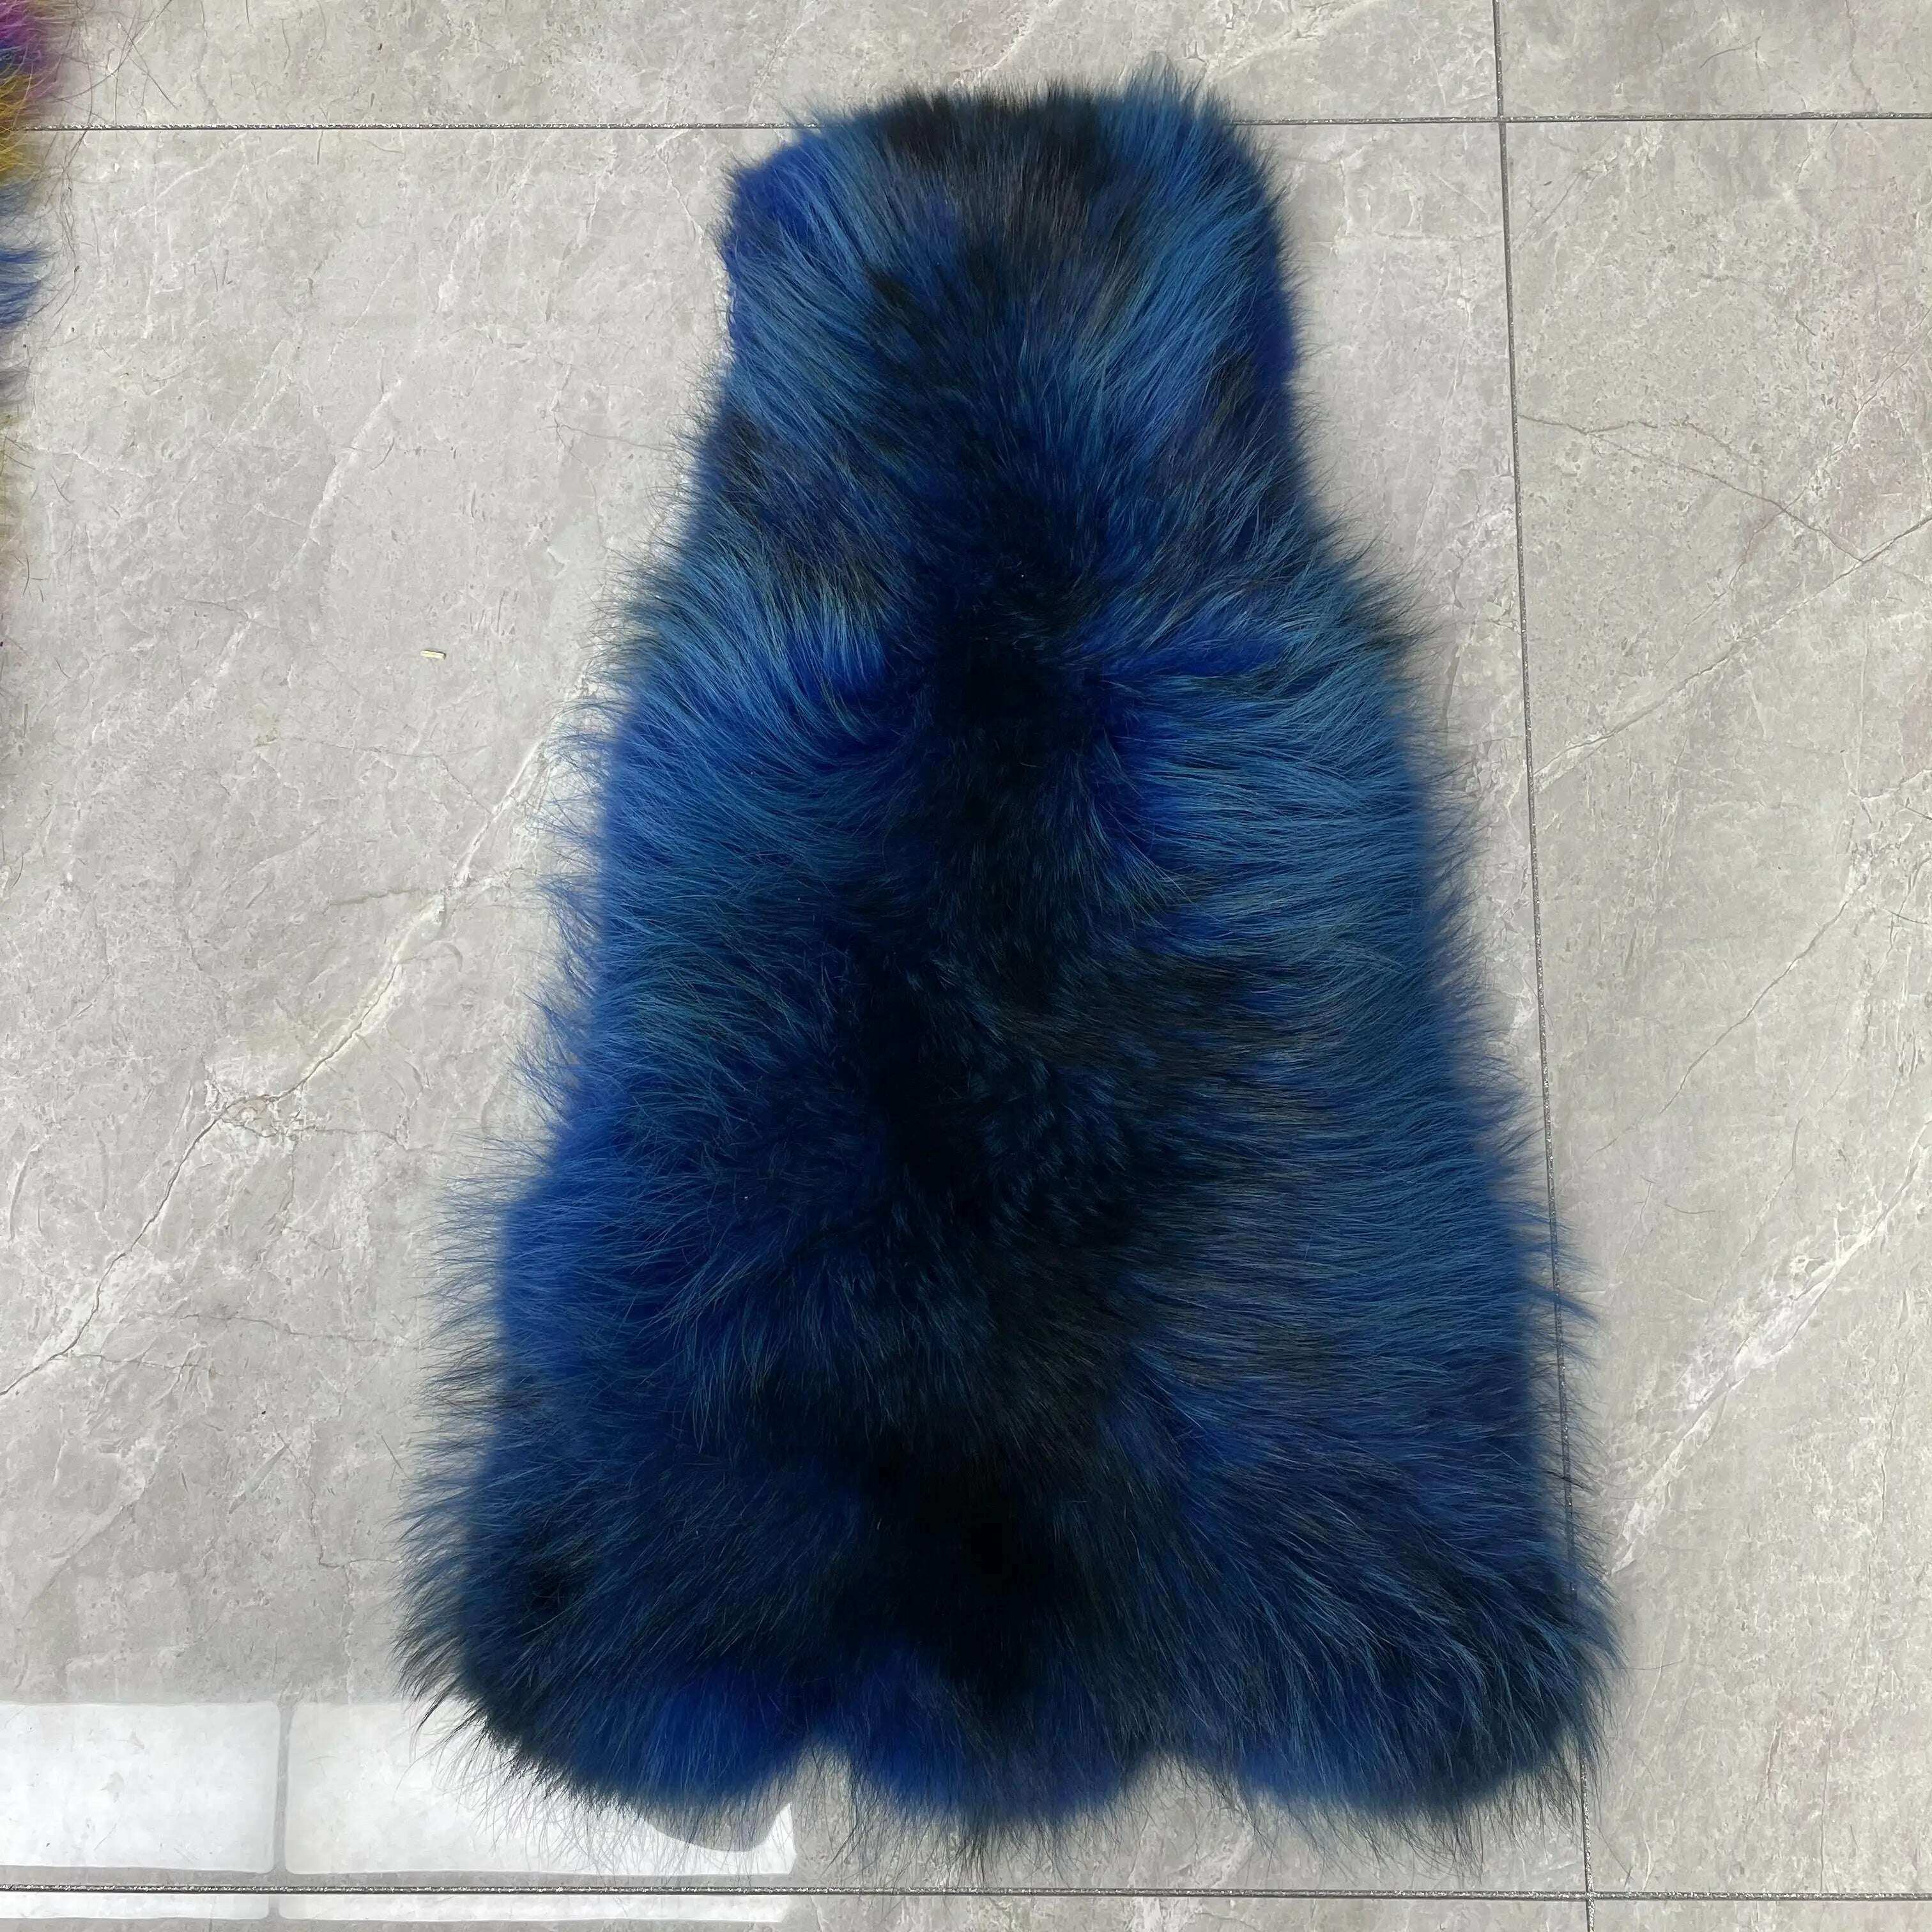 KIMLUD, Real Raccoon Fur Jacket Men Fashion Coat Winter Warm Long Style, Deep Blue / XS(88cm), KIMLUD Women's Clothes